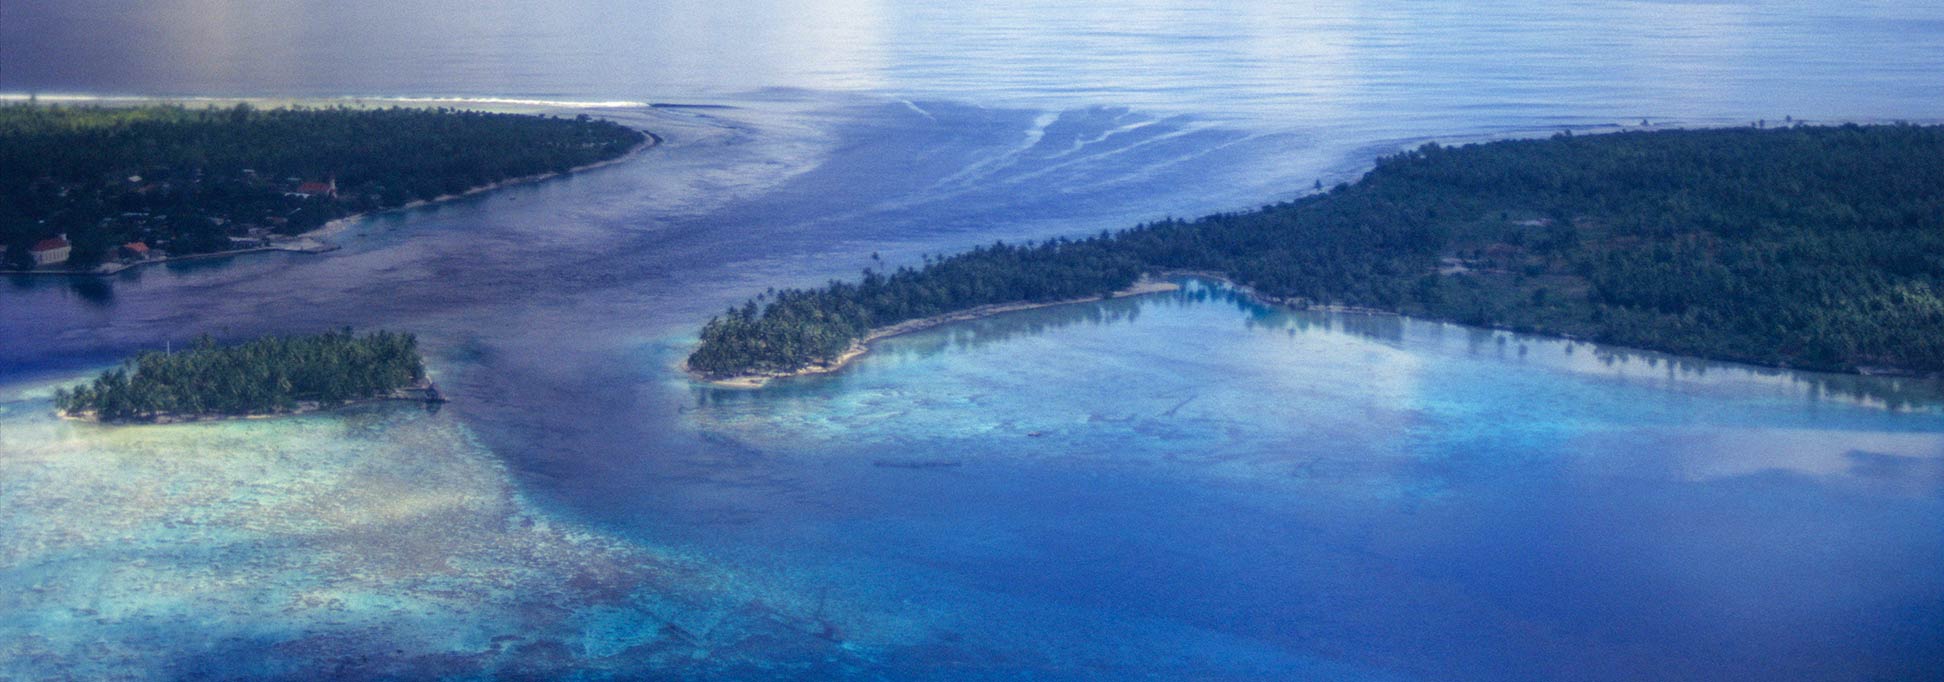 Rangiroa Atoll in the Tuamotu Archipelago of French Polynesia